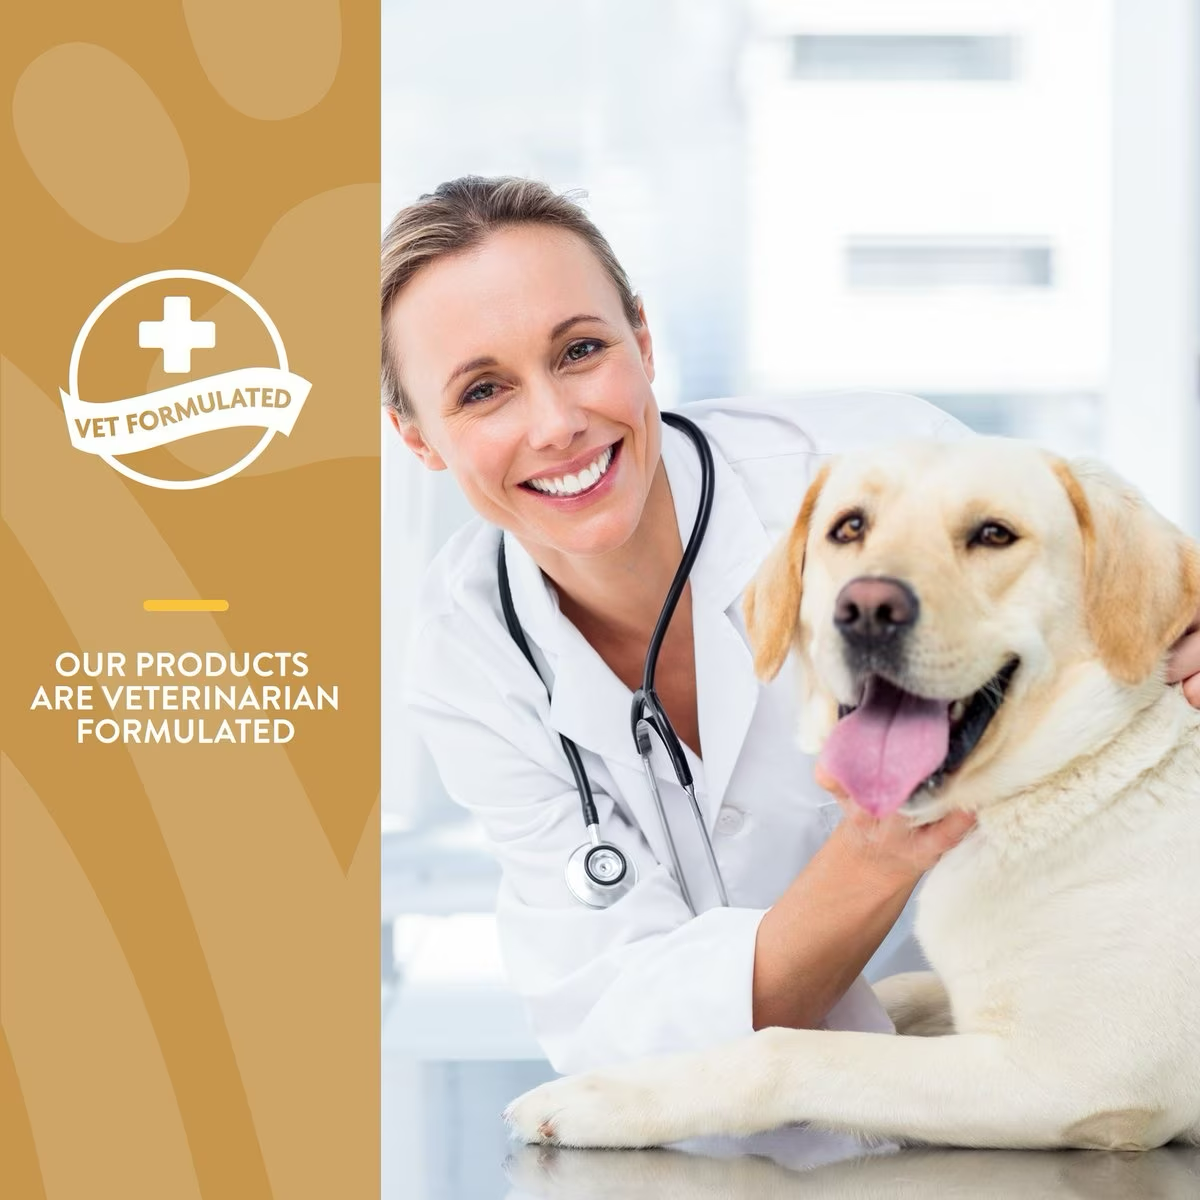 Naturvet Dog & Cat Scoopables Omega Gold  Health Care  | PetMax Canada